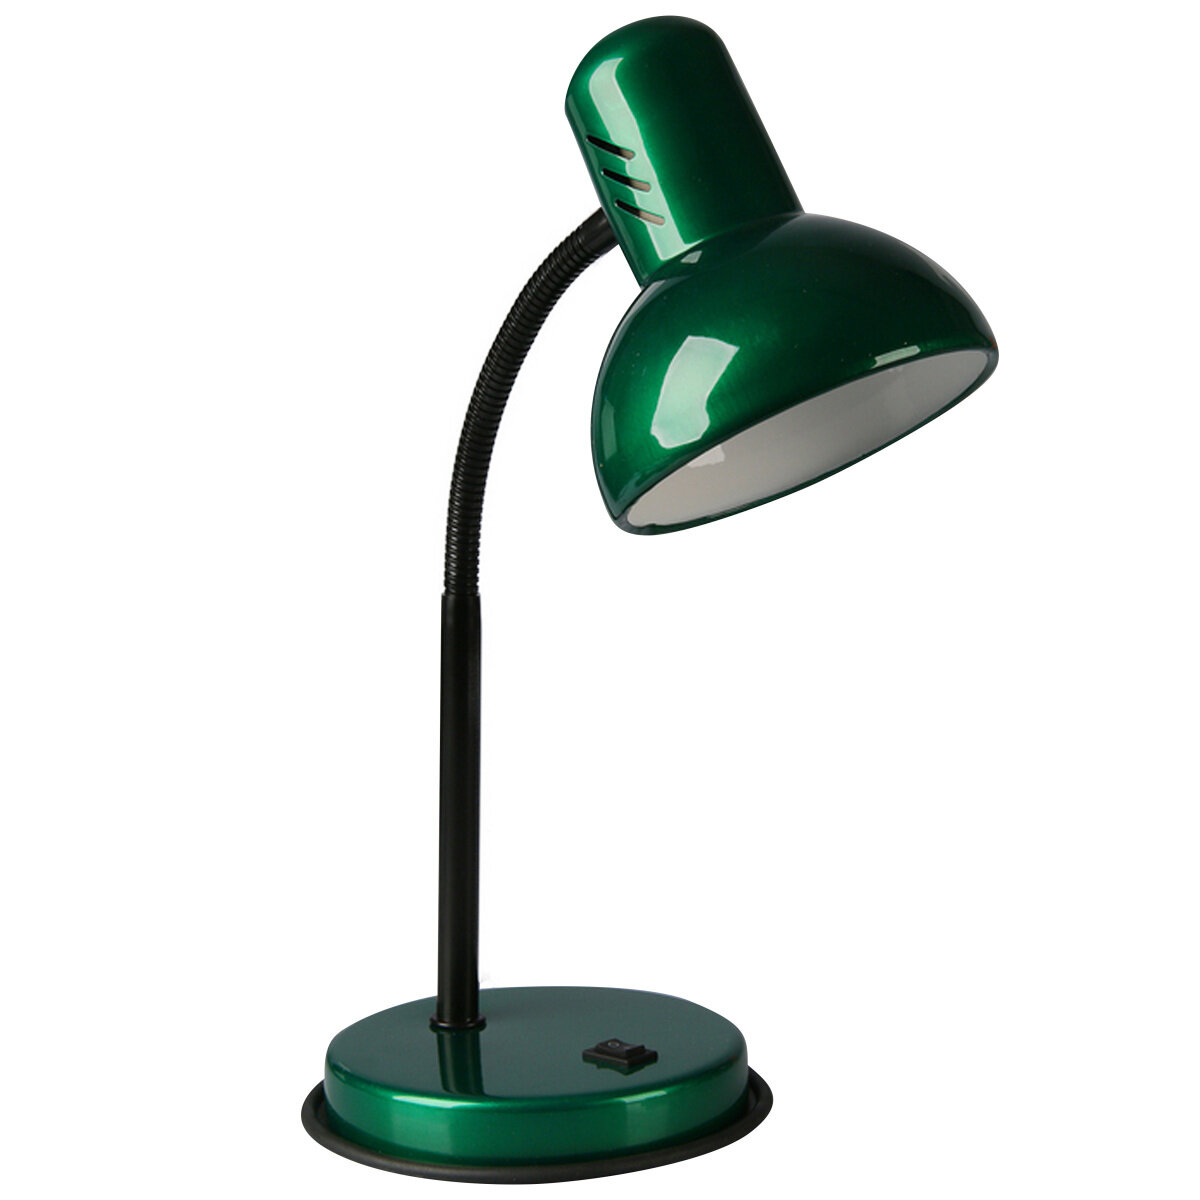 Настольная лампа НТ 2077А, 1xE27, 60Вт, 220В, на подставке, гибкая стойка, зеленый перламутр 2001019620010